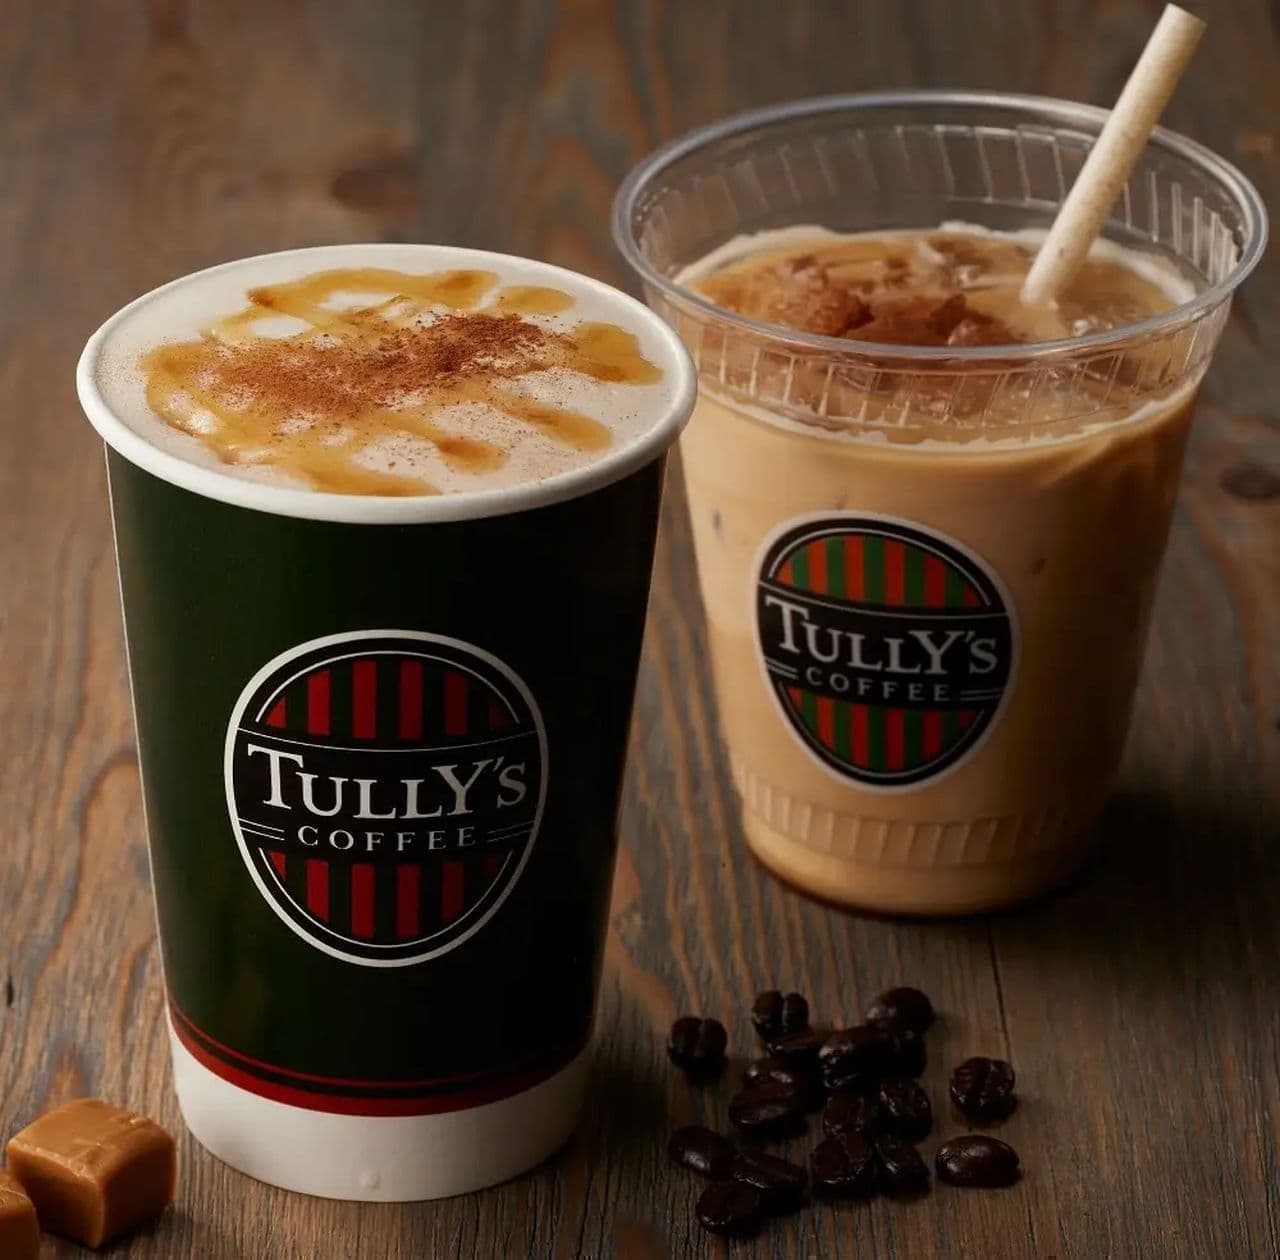 Tully's Coffee "Maple Caramel Macchiato